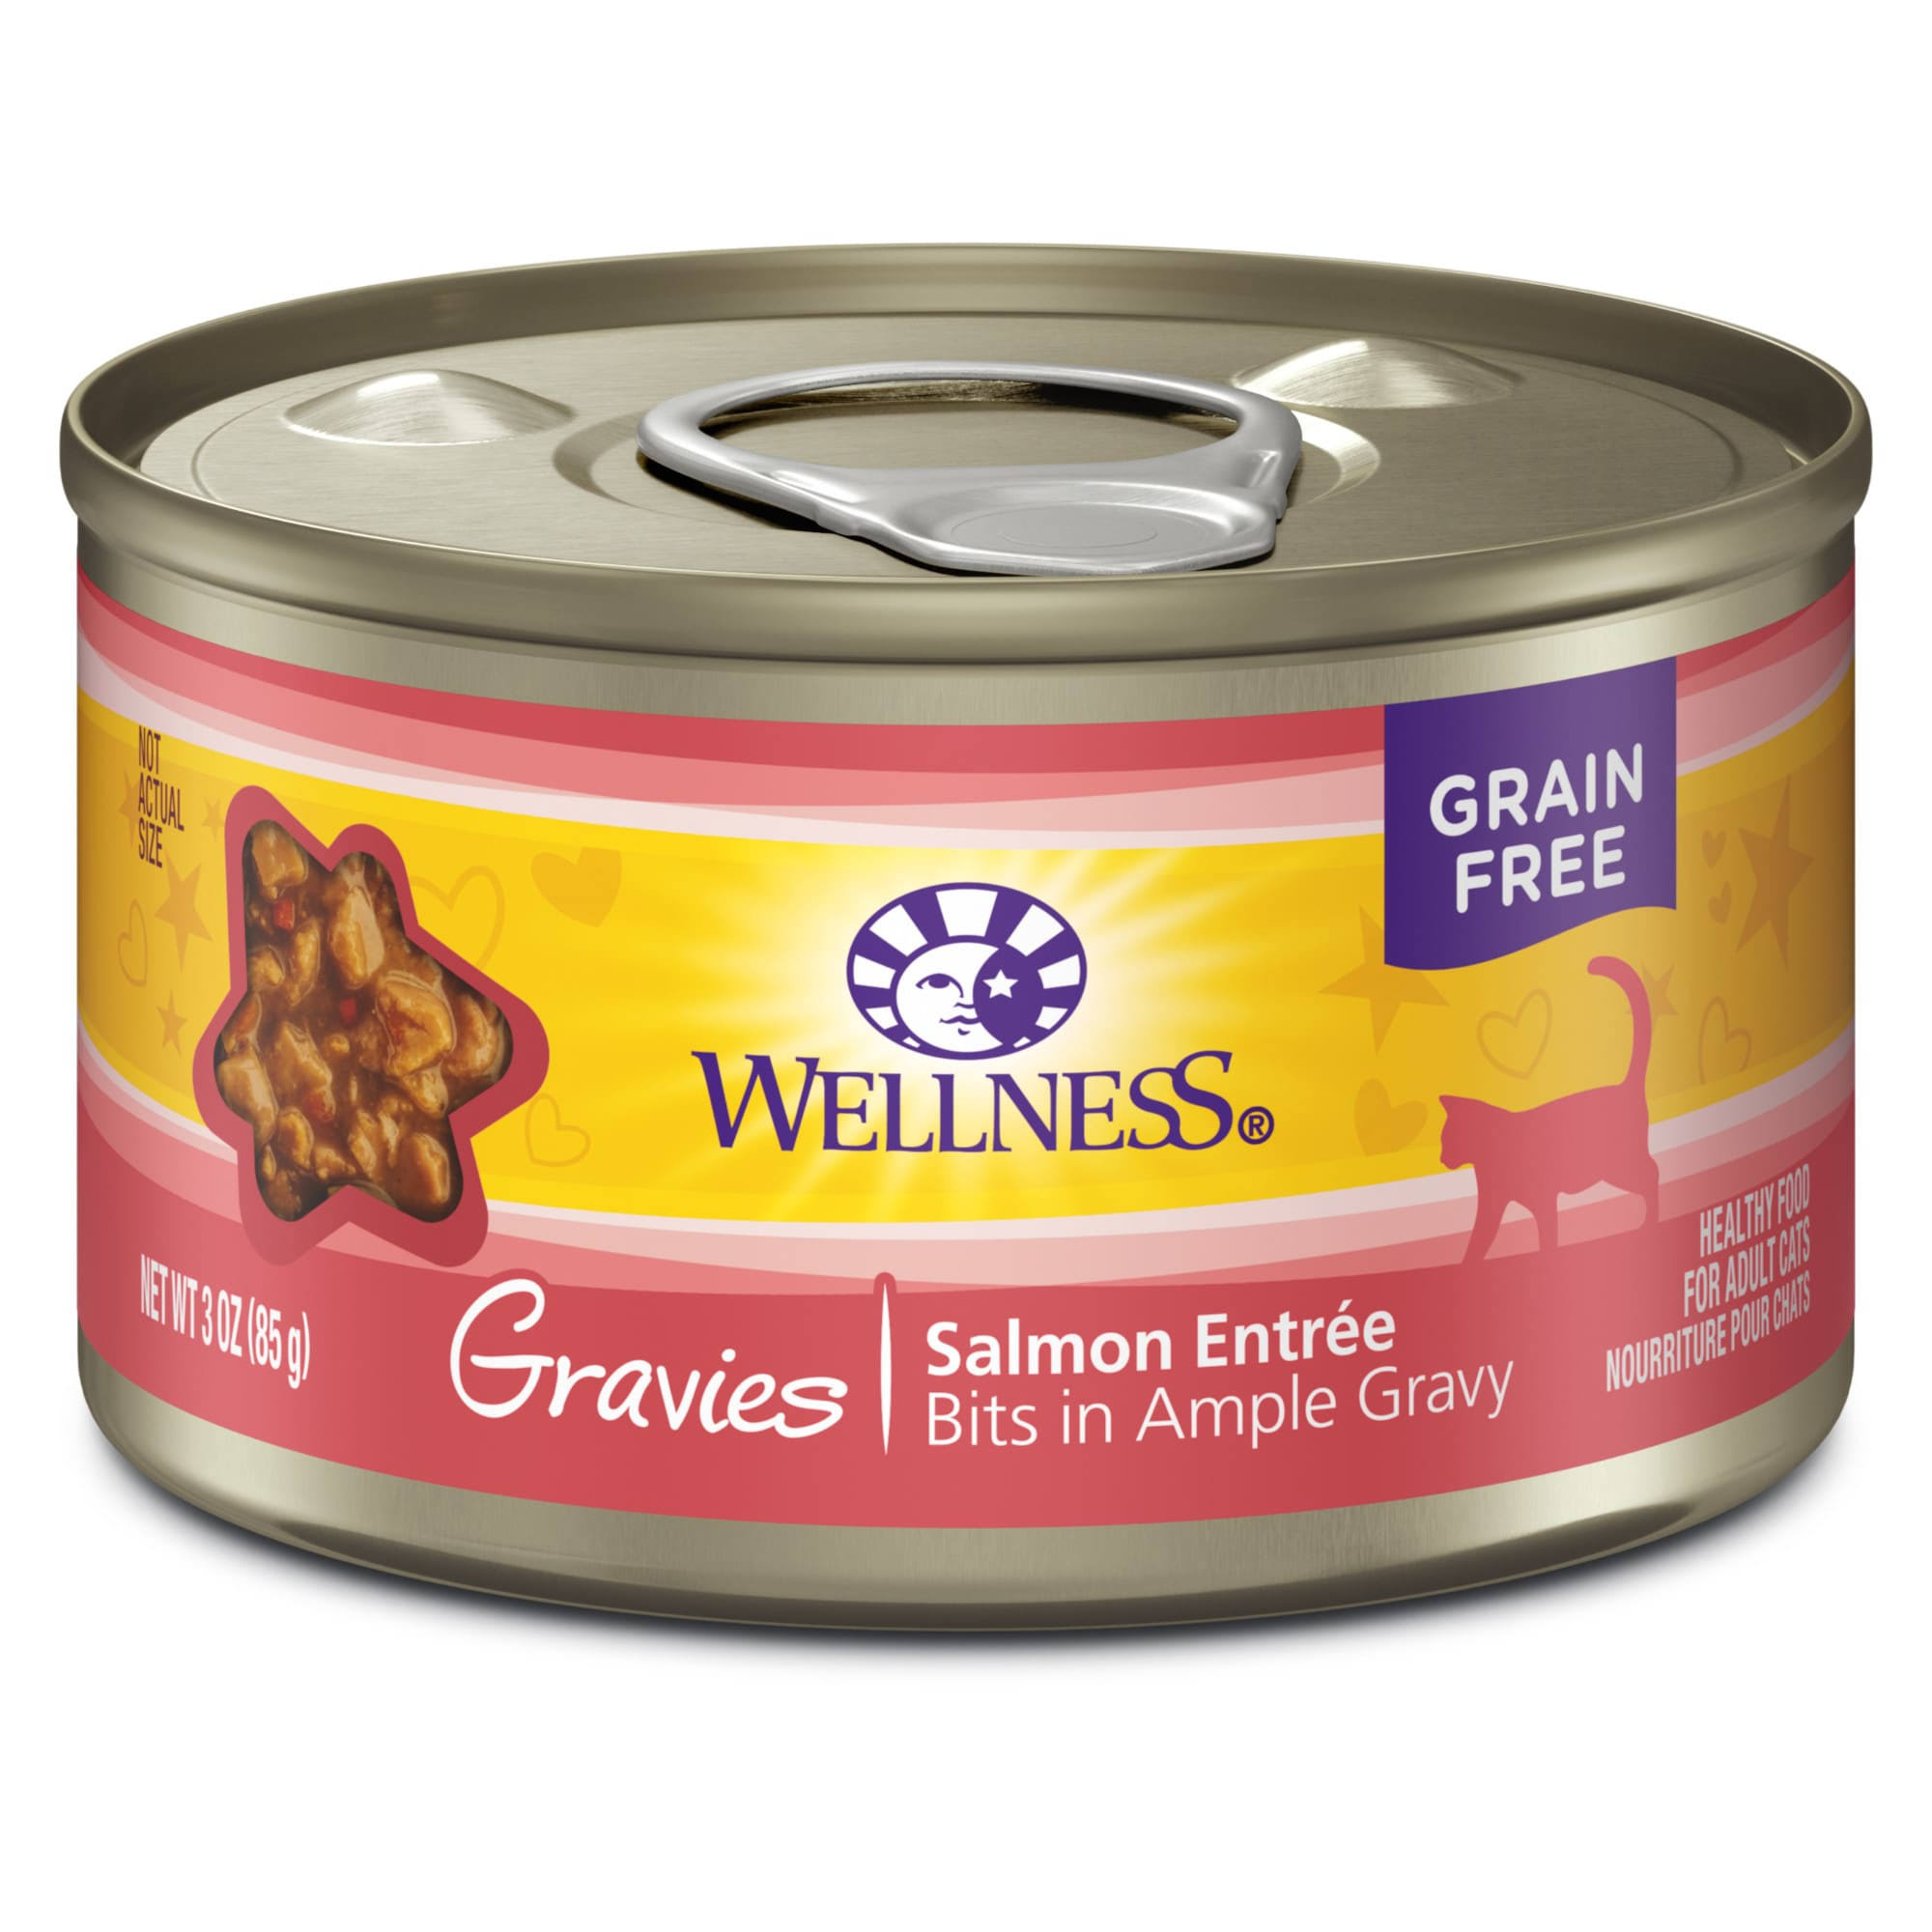 Wellness Gravies Adult Cat Wet Food - Natural, Grain Free